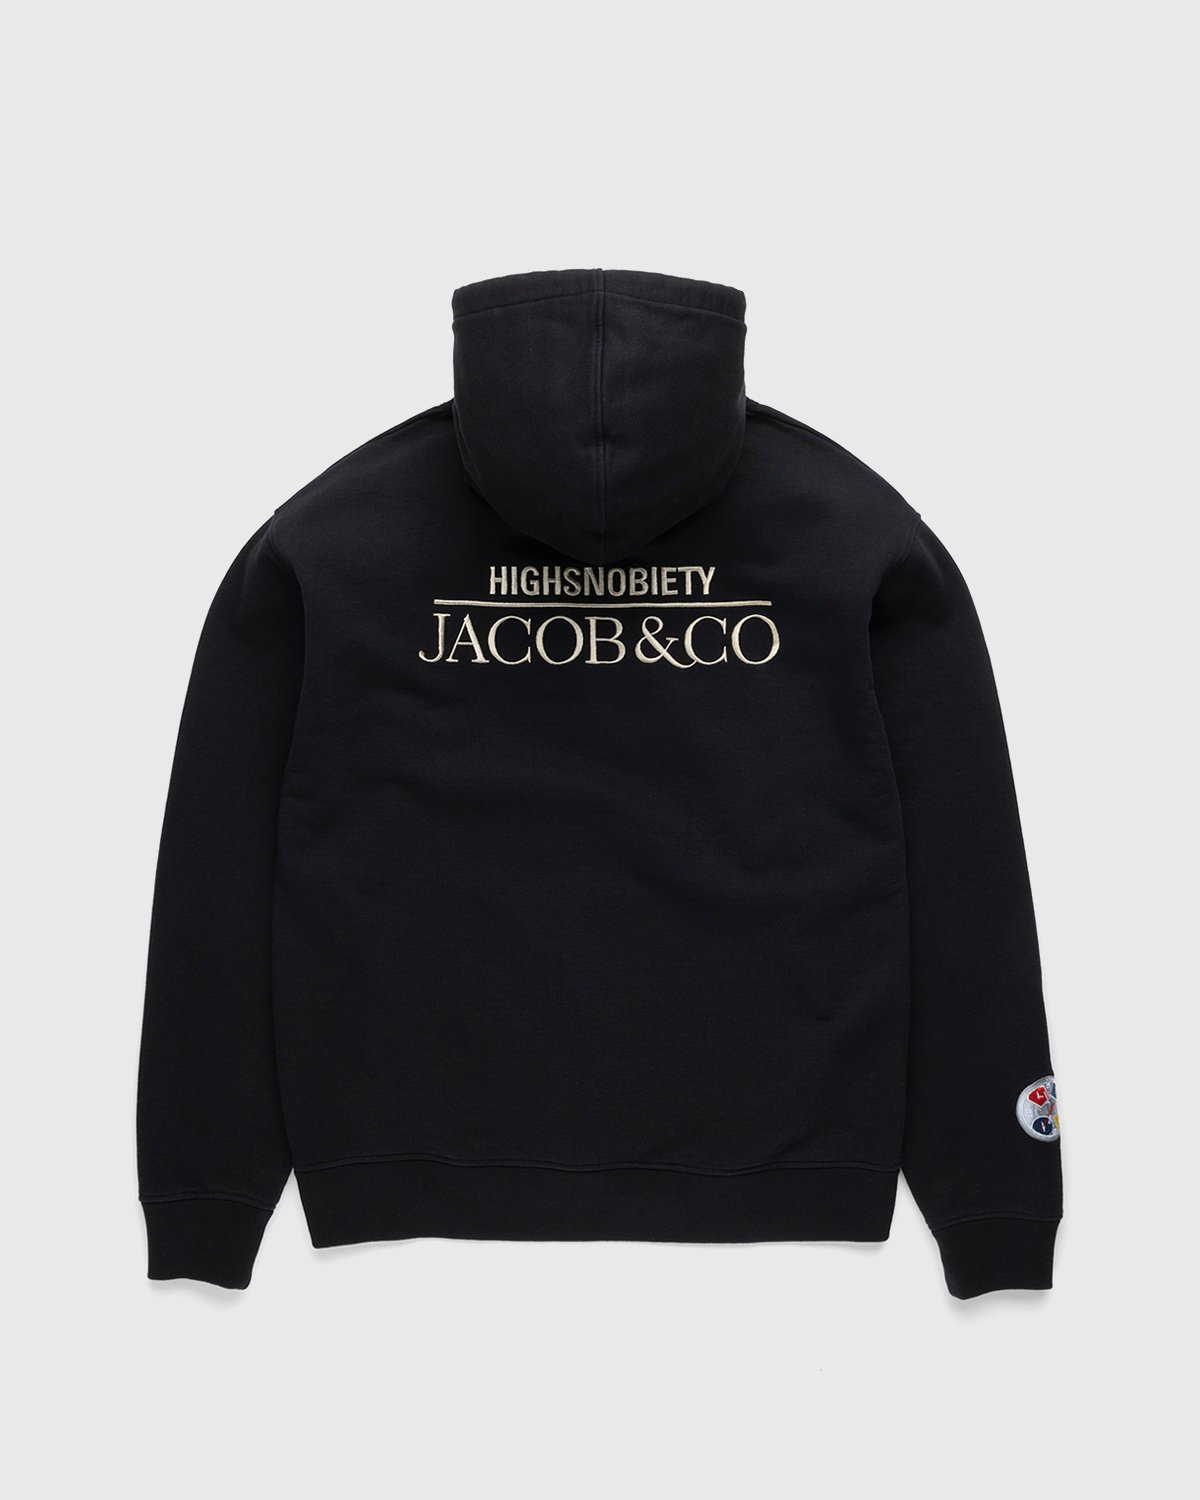 Jacob & Co. x Highsnobiety - Logo Fleece Hoodie Black - Clothing - Black - Image 1